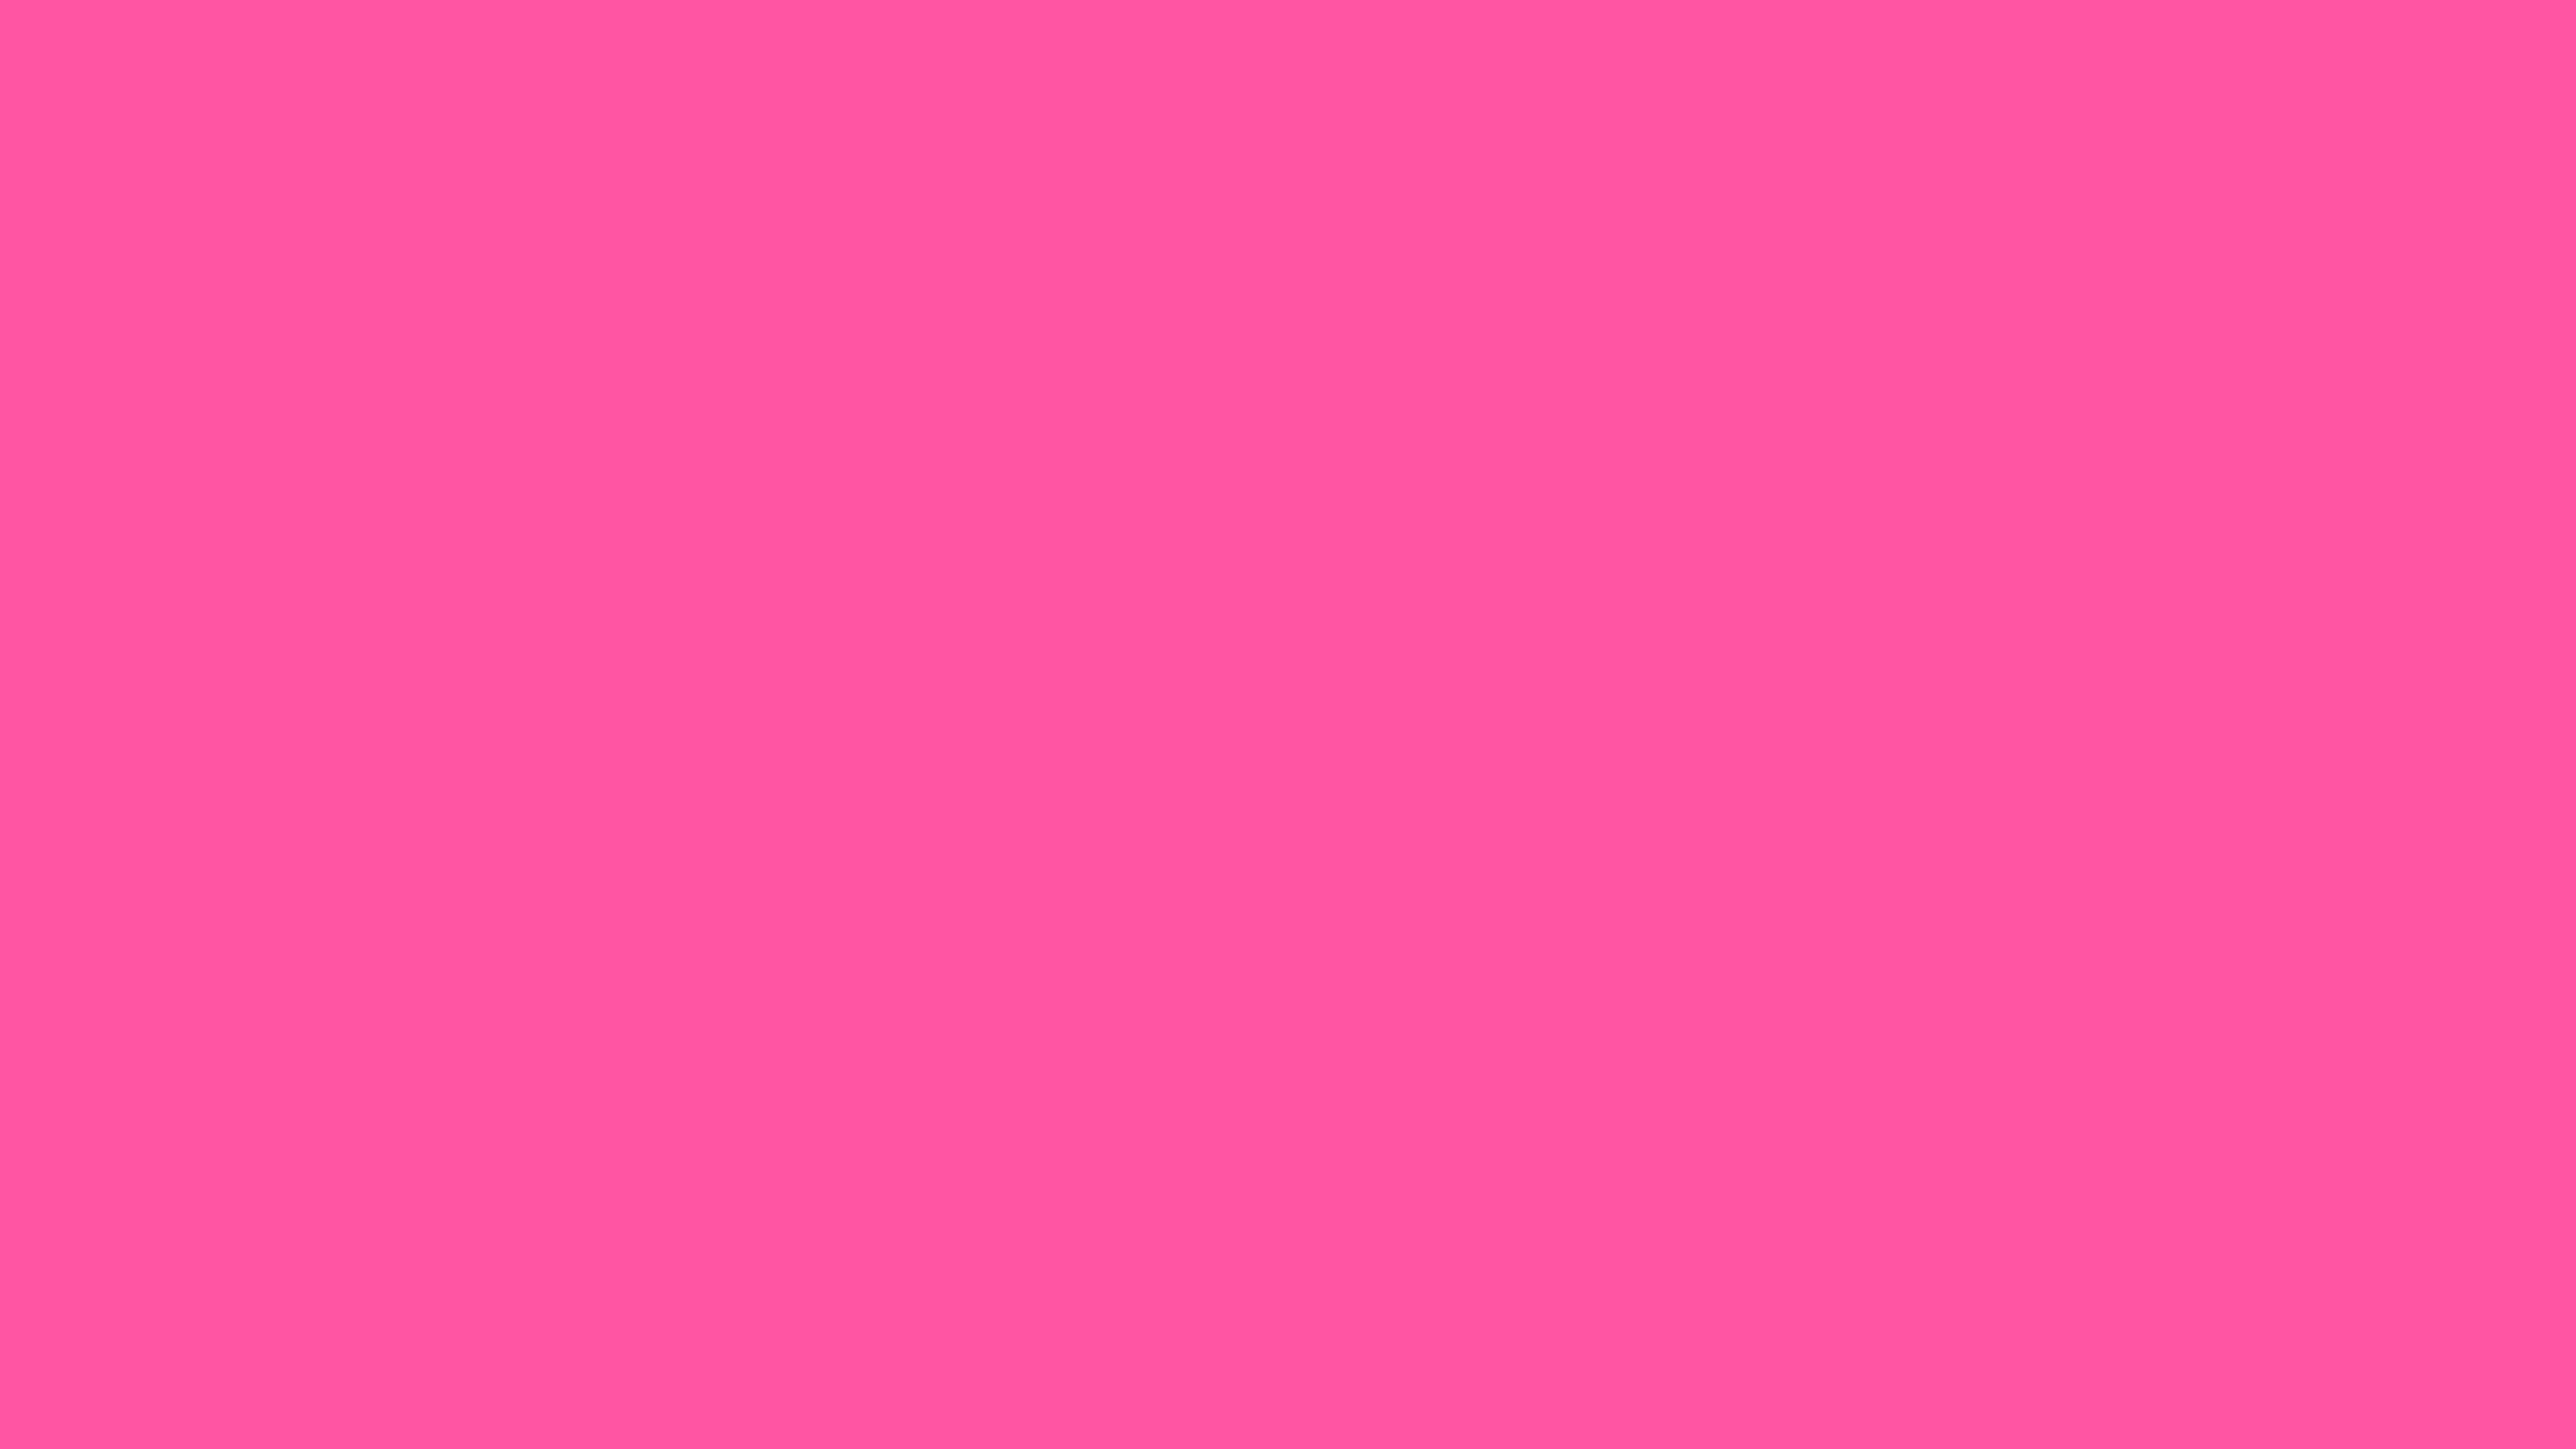 3840x2160 Brilliant Rose Solid Color Background